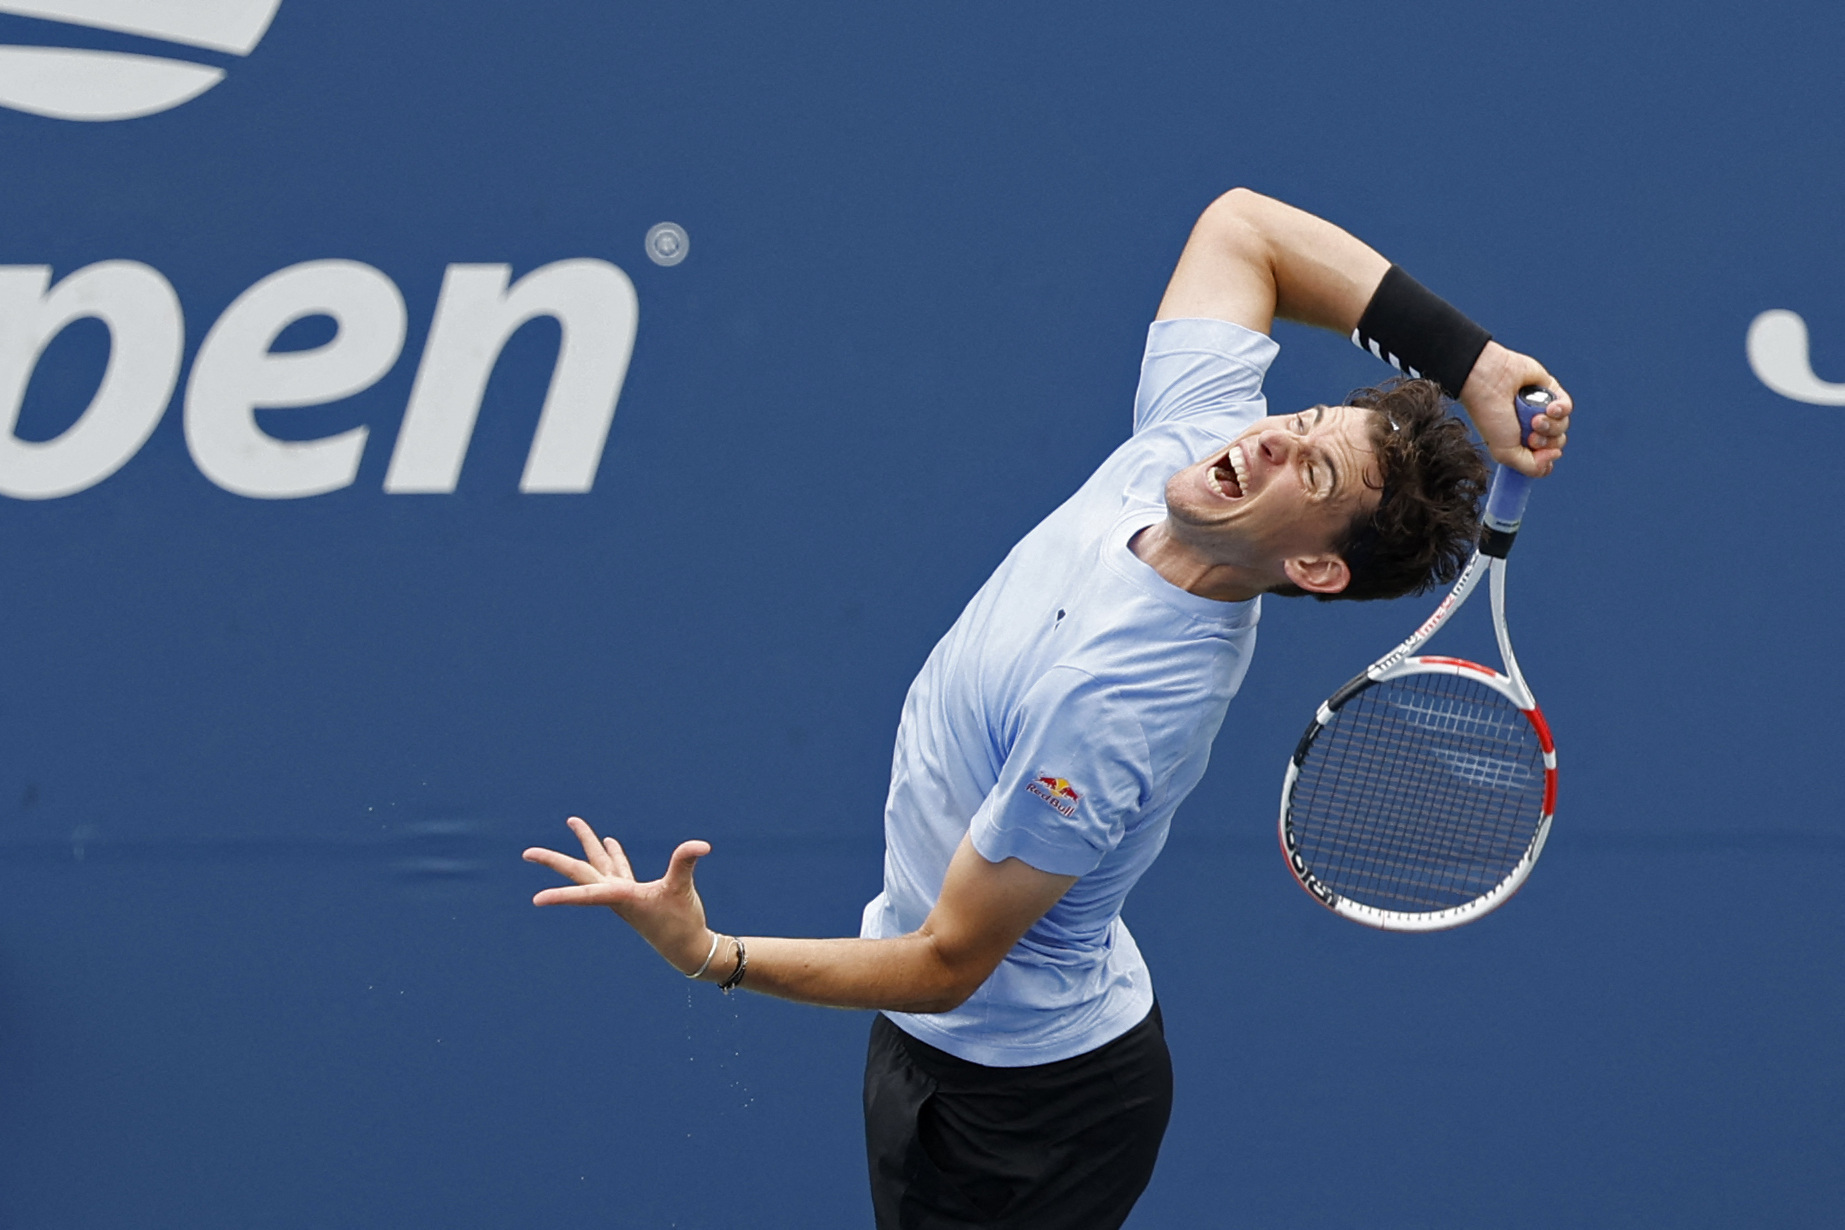 Dominic Thiem latest news, injuries and updates - tennis news